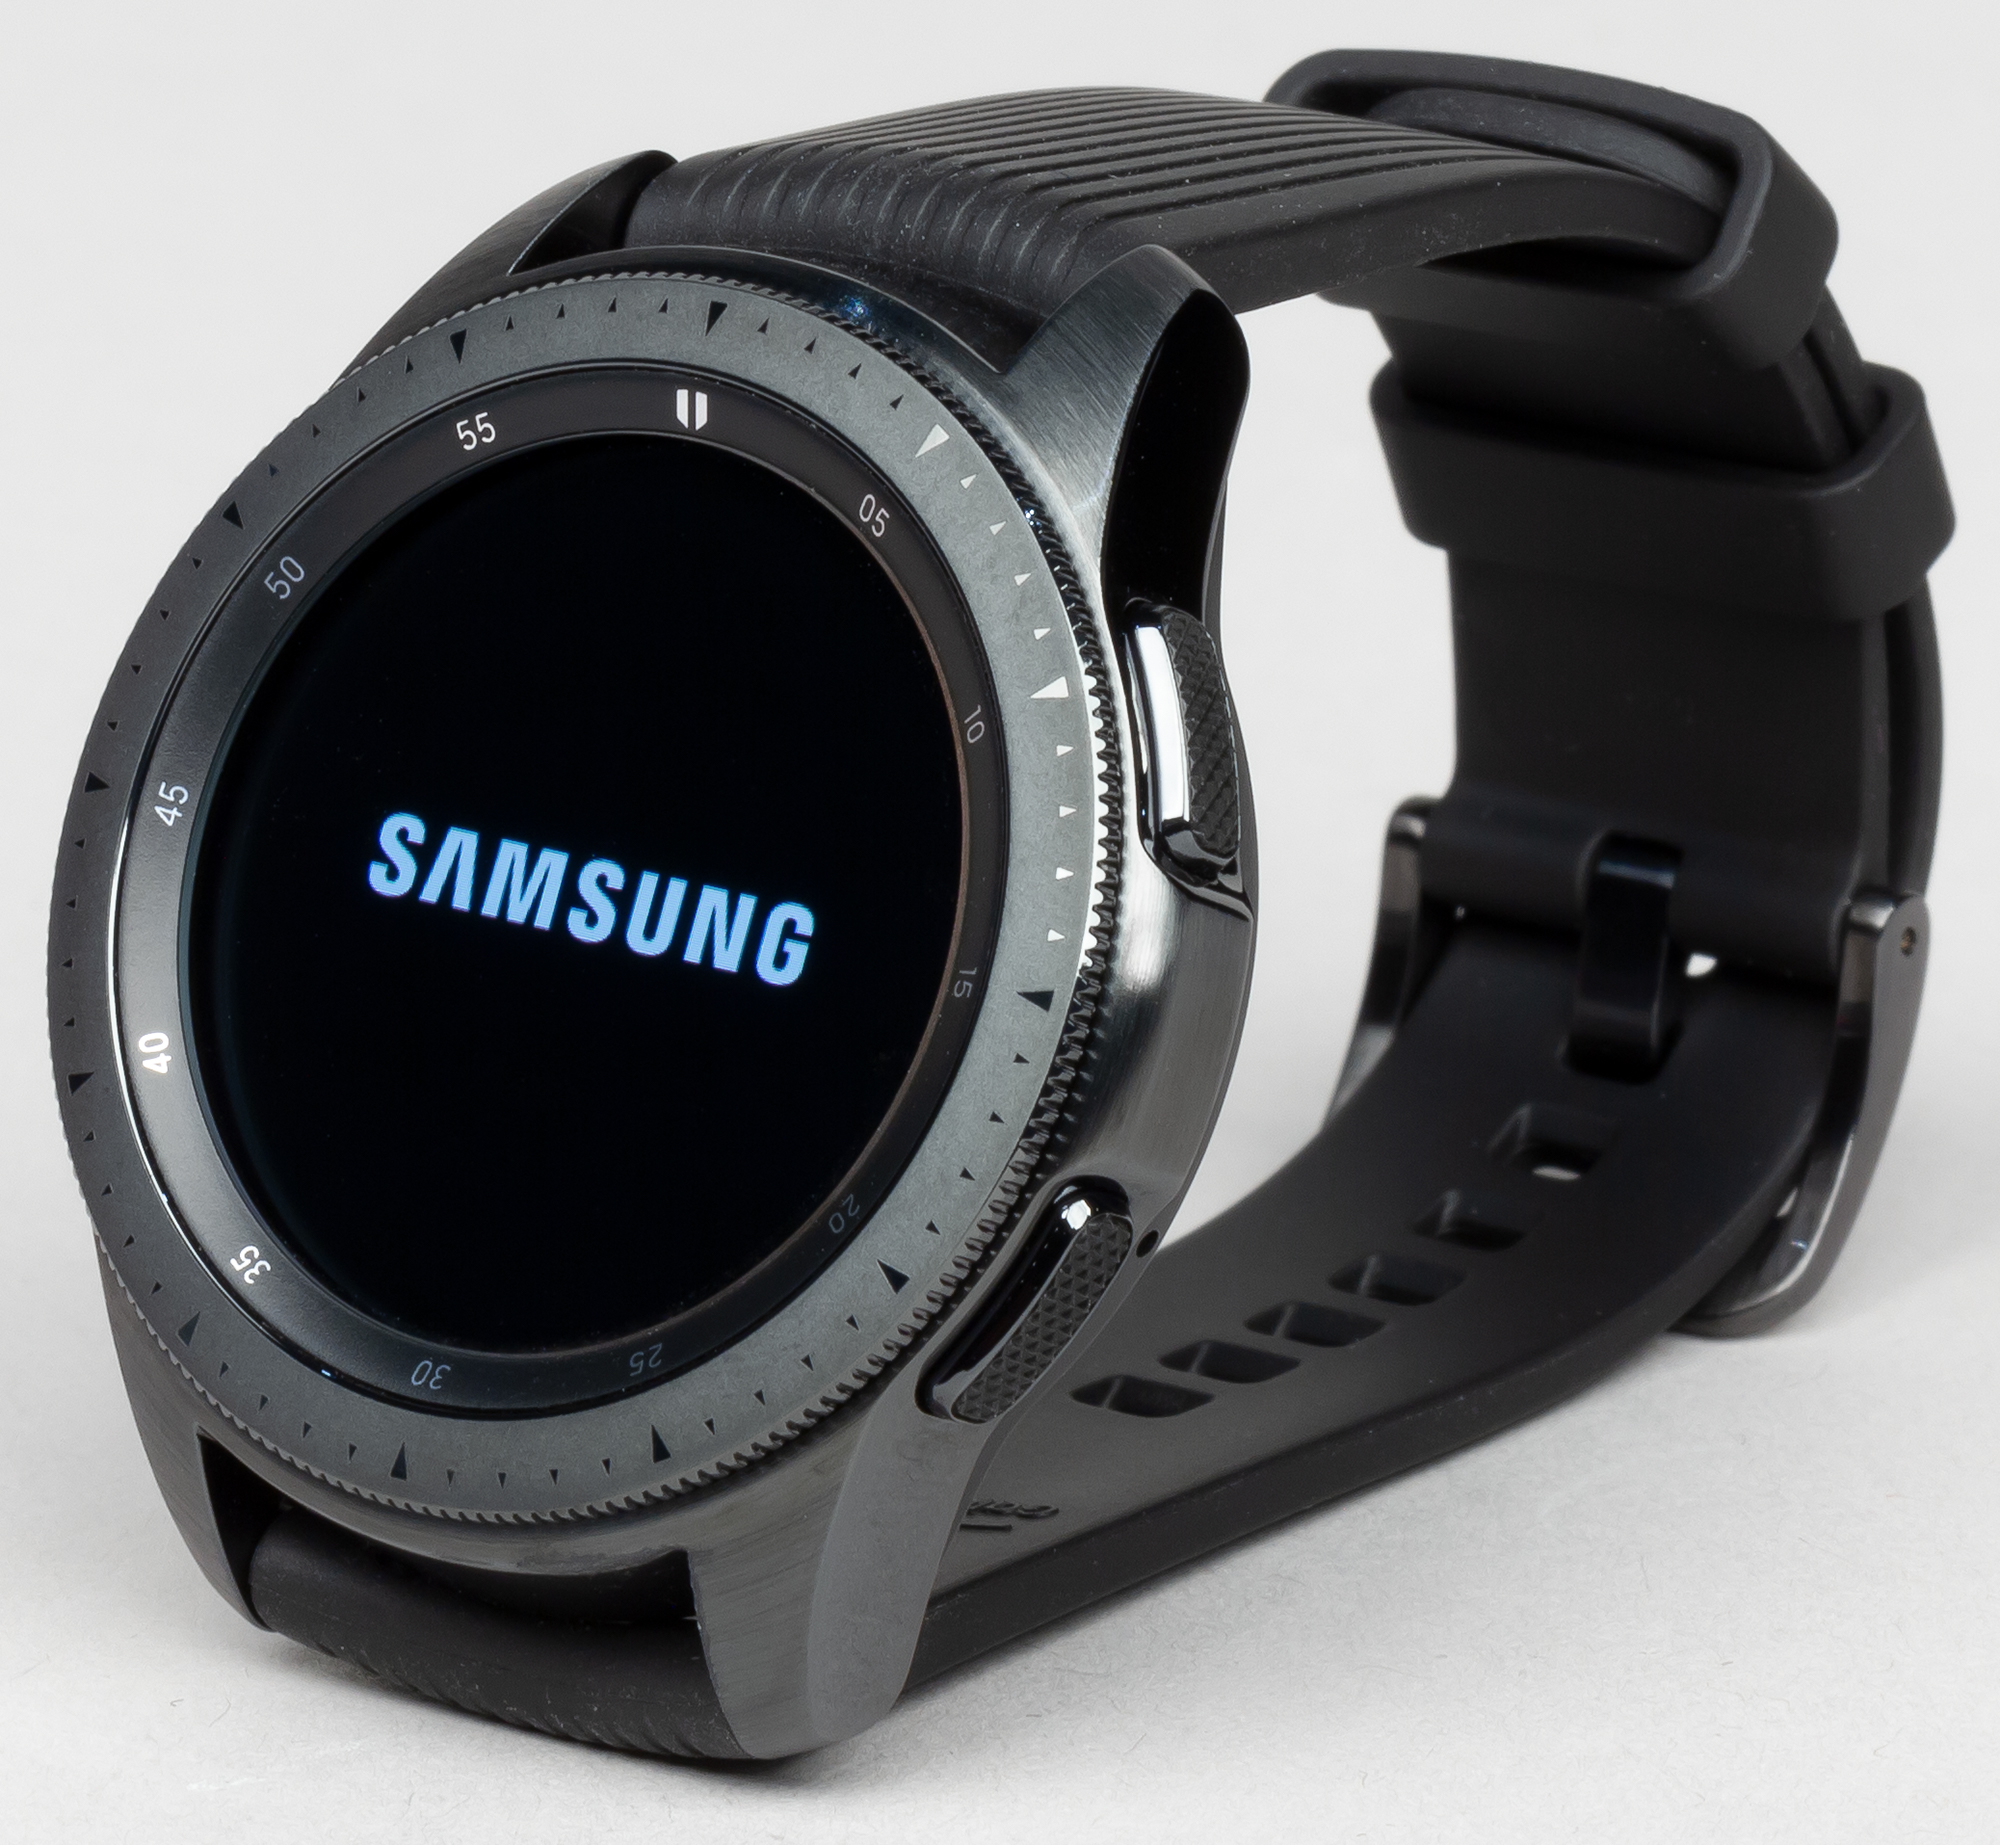 Galaxy watch последние. Samsung Galaxy watch 42mm. Samsung Galaxy watch 42мм. Часы Samsung Galaxy watch 42mm. Samsung Galaxy watch 42mm Black.